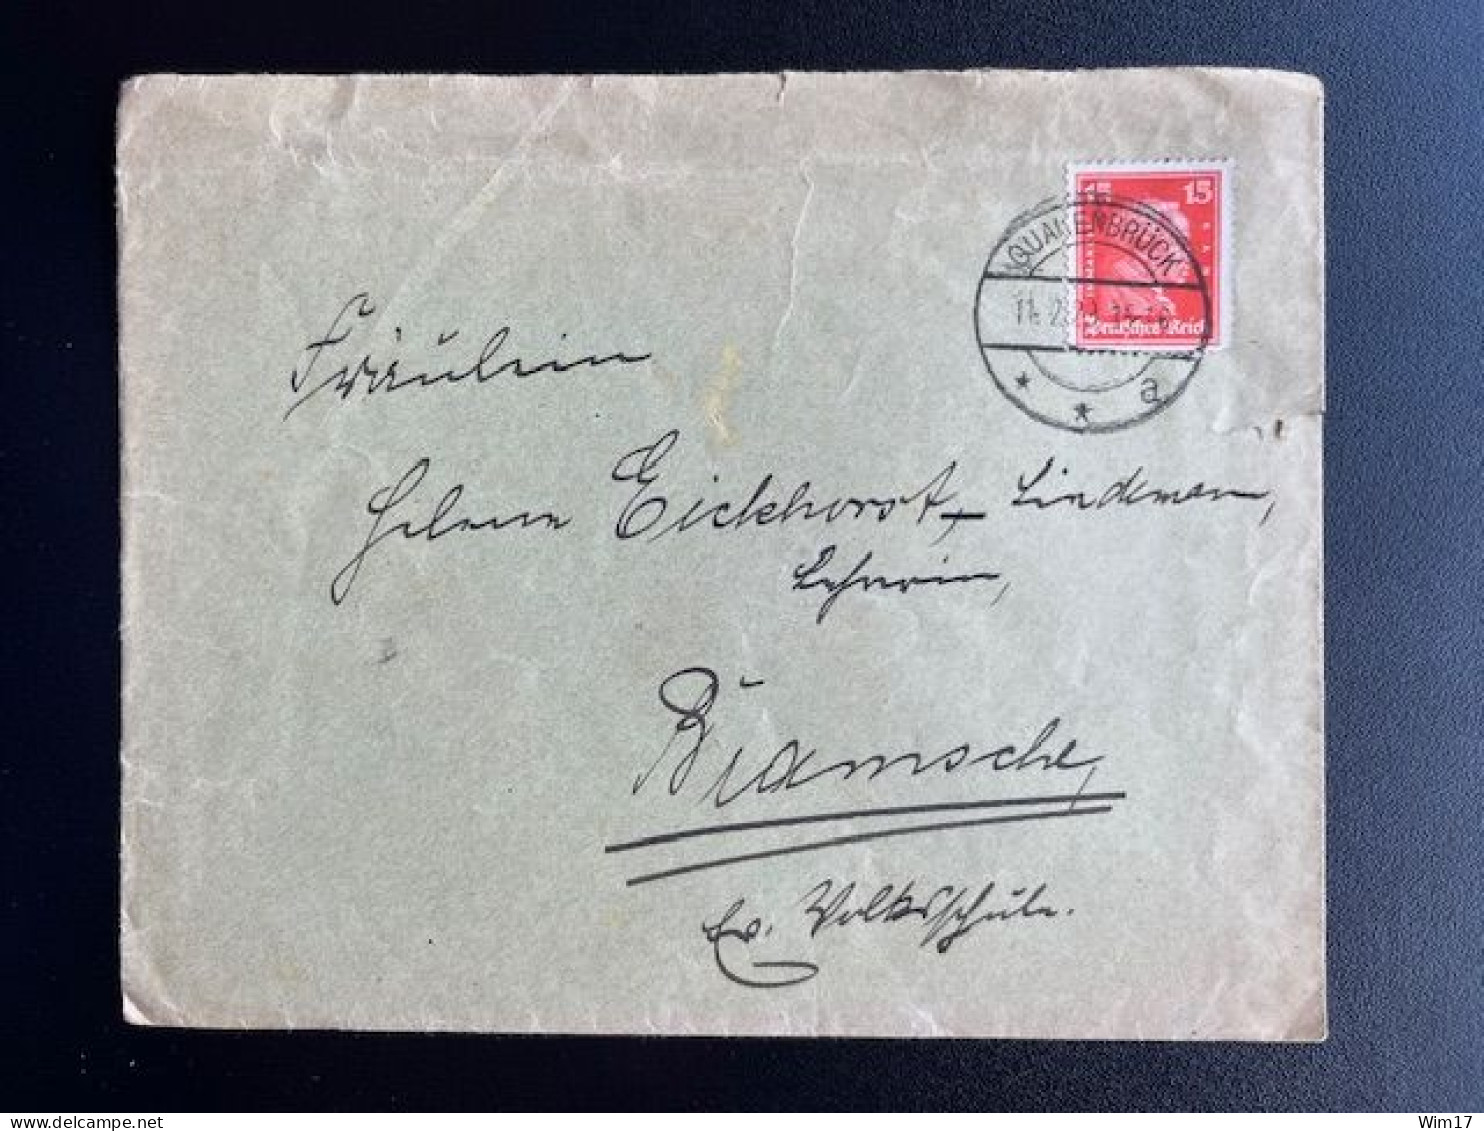 GERMANY 1929 LETTER QUAKENBRUCK 11-02-1929 DUITSLAND DEUTSCHLAND - Storia Postale